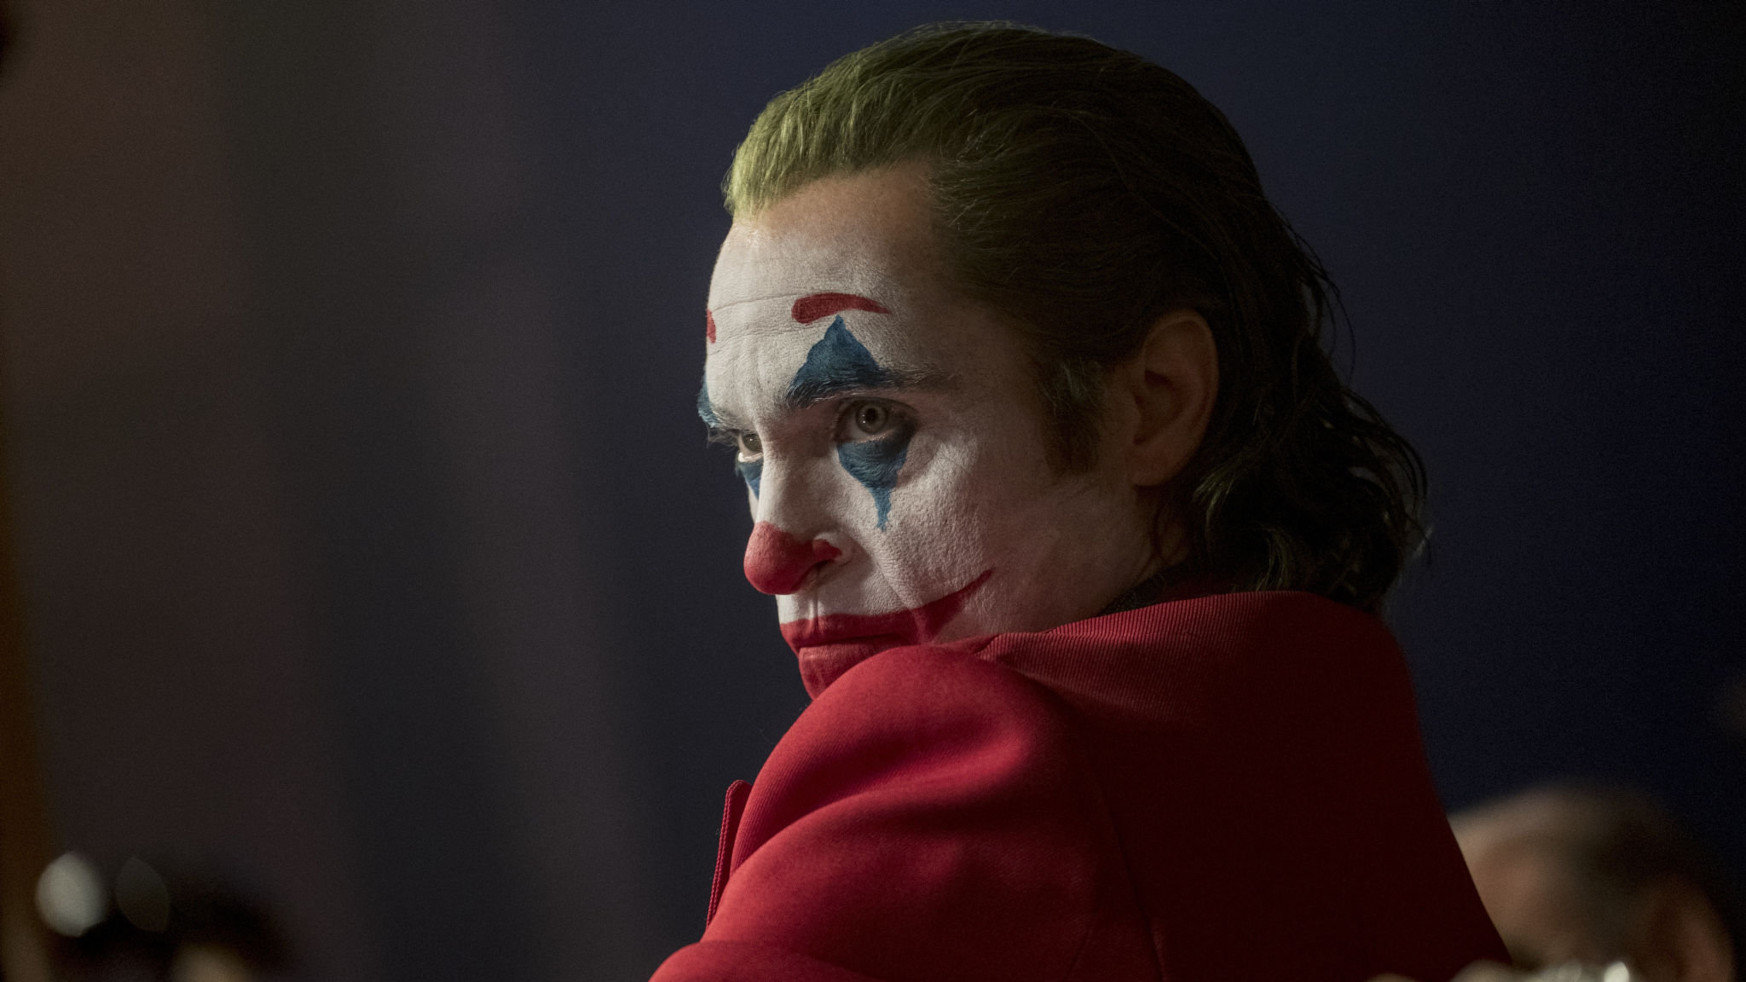 «Joker: Folie à Deux»: Ανακοινώθηκε η ημερομηνία κυκλοφορίας του sequel